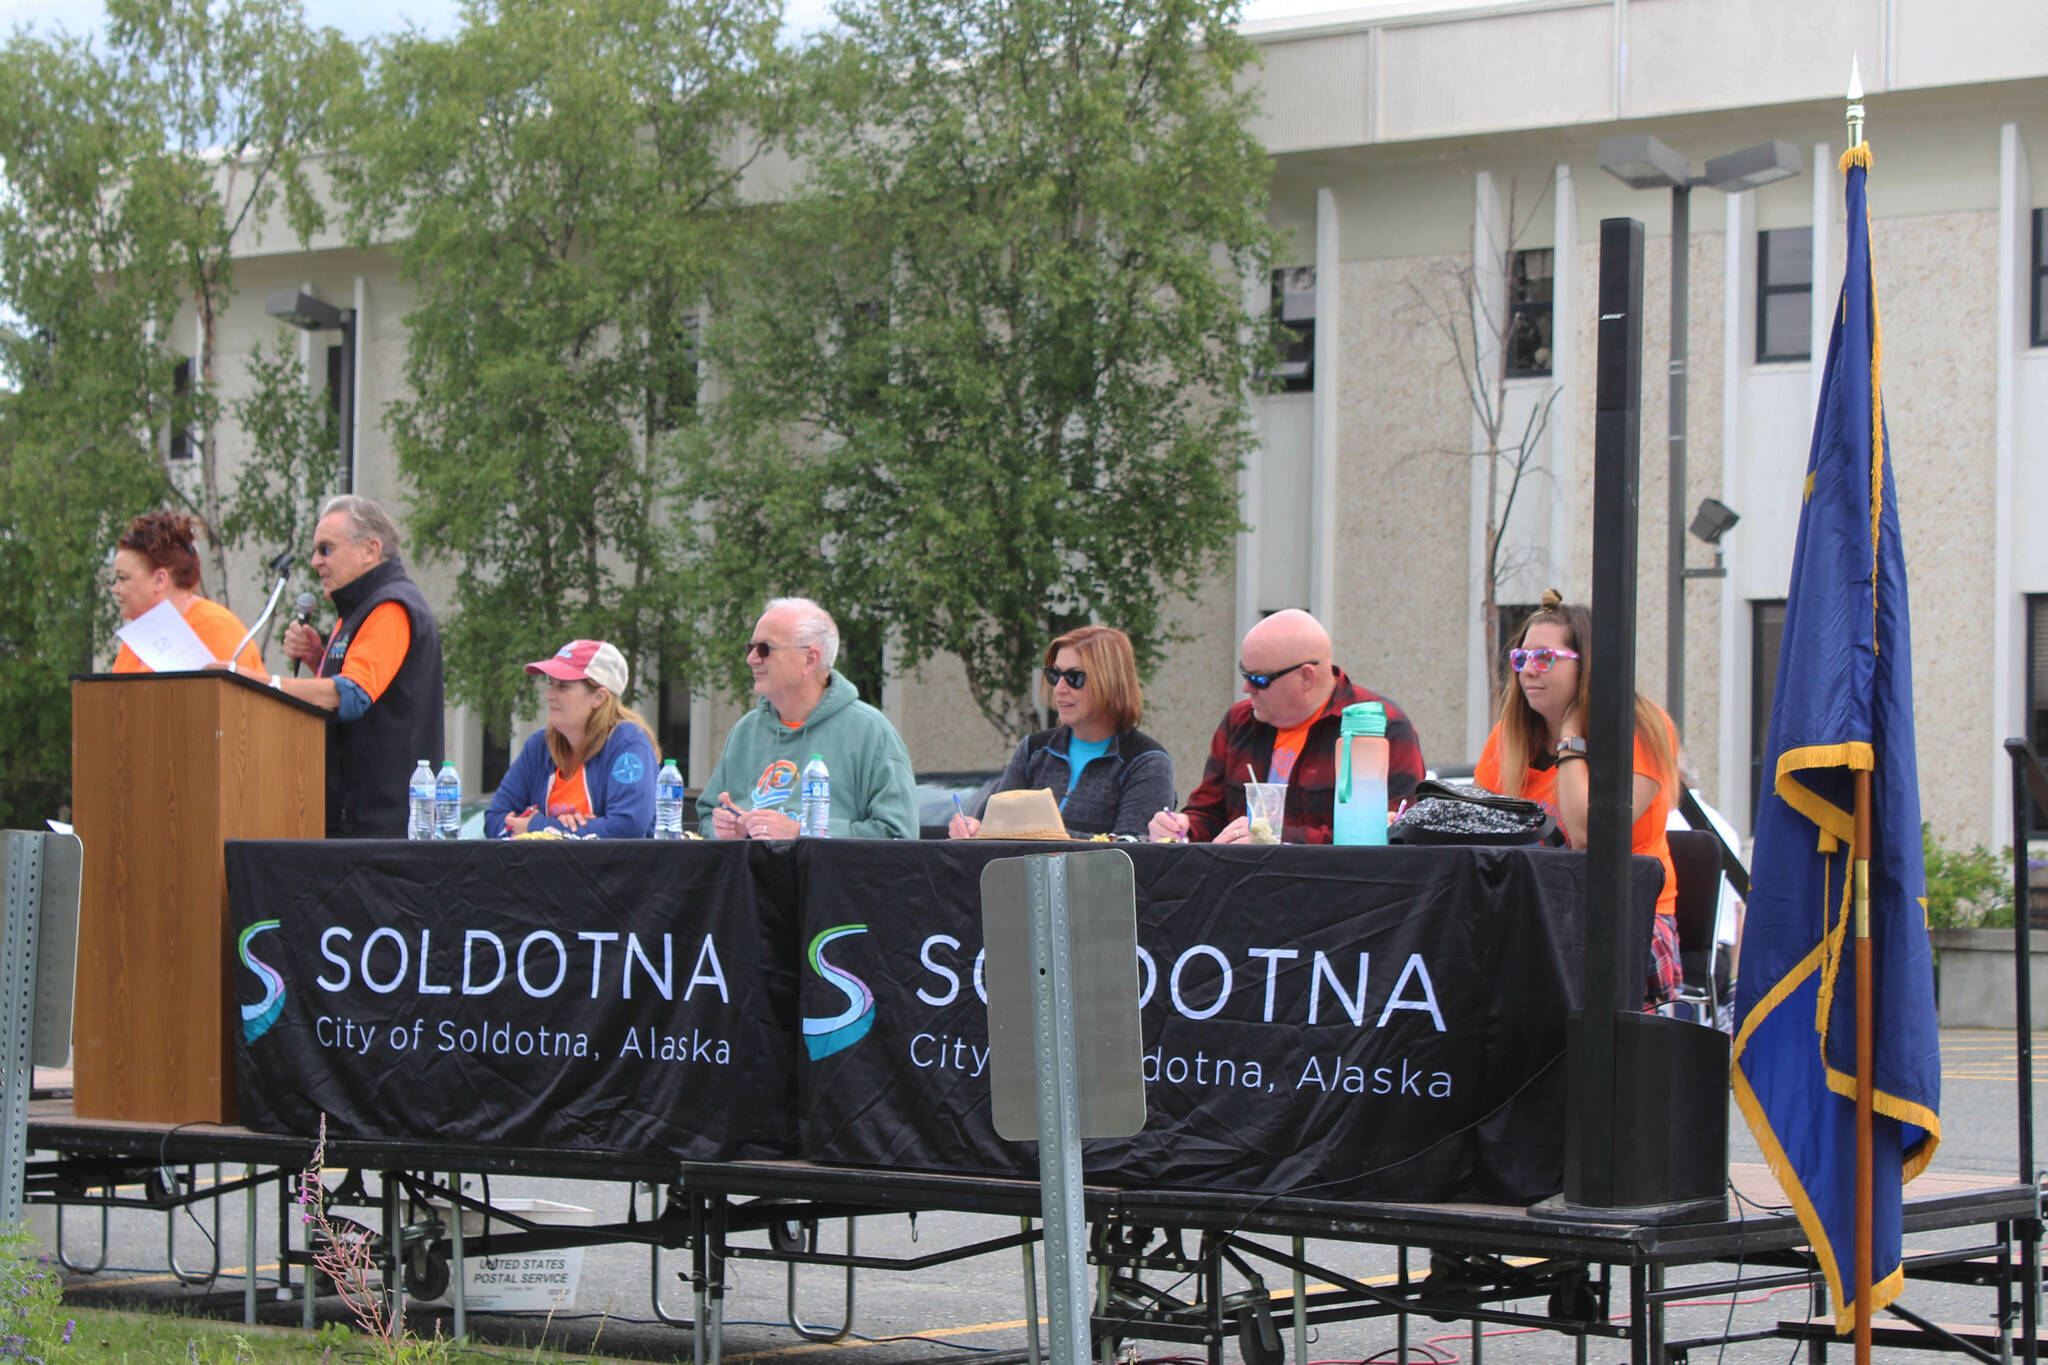 Panelists judge floats in the 65th annual Soldotna Progress Days Parade on Saturday, July 23, 2022, in Soldotna, Alaska. (Ashlyn O’Hara/Peninsula Clarion)